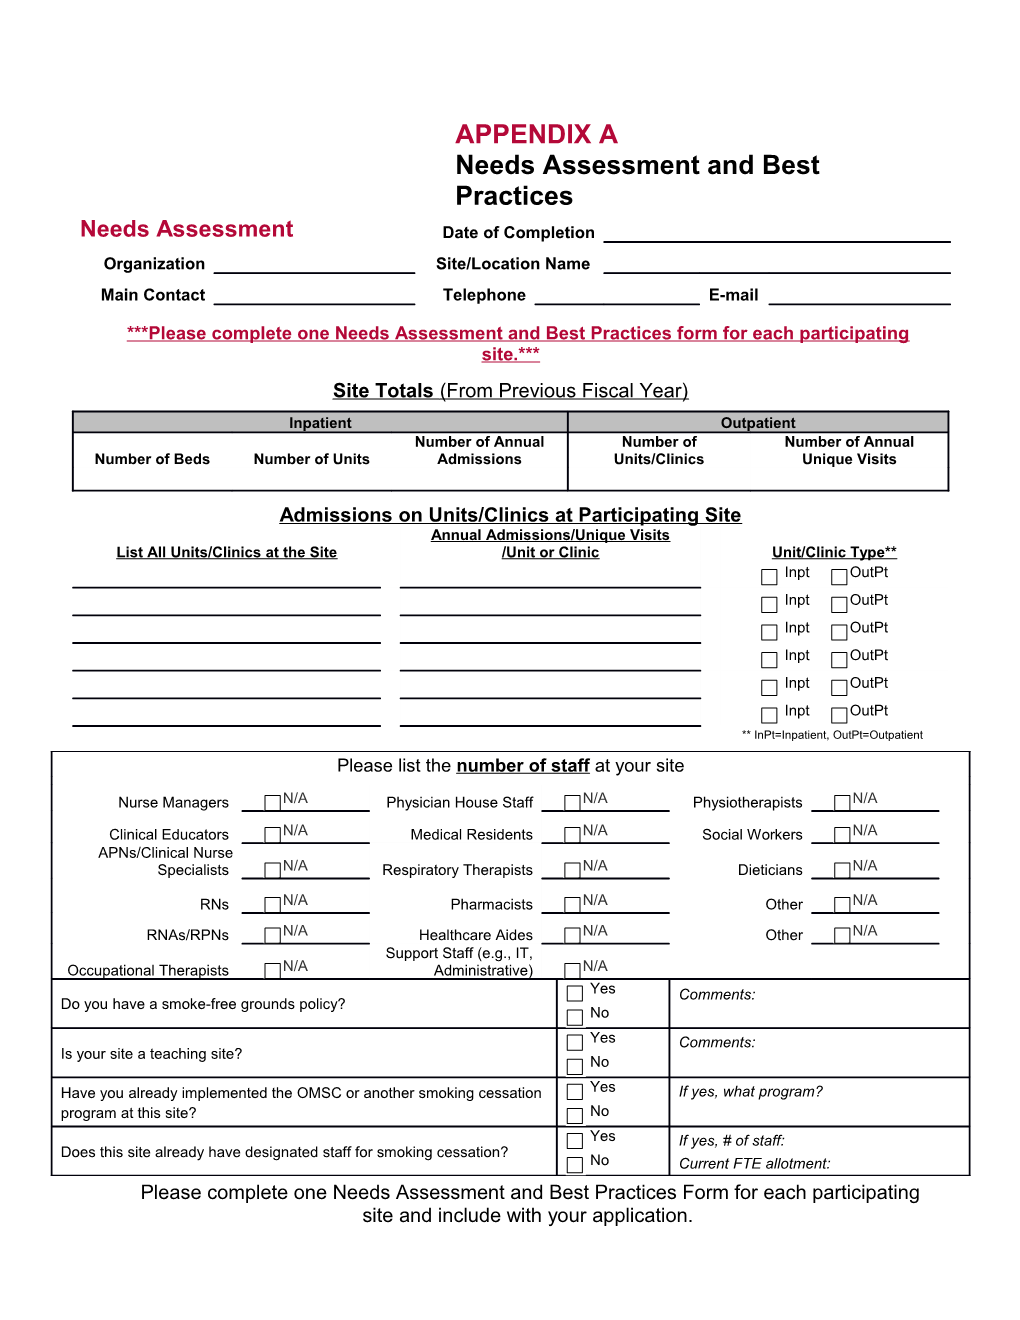 Pre-Implementation Needs Assessment Form